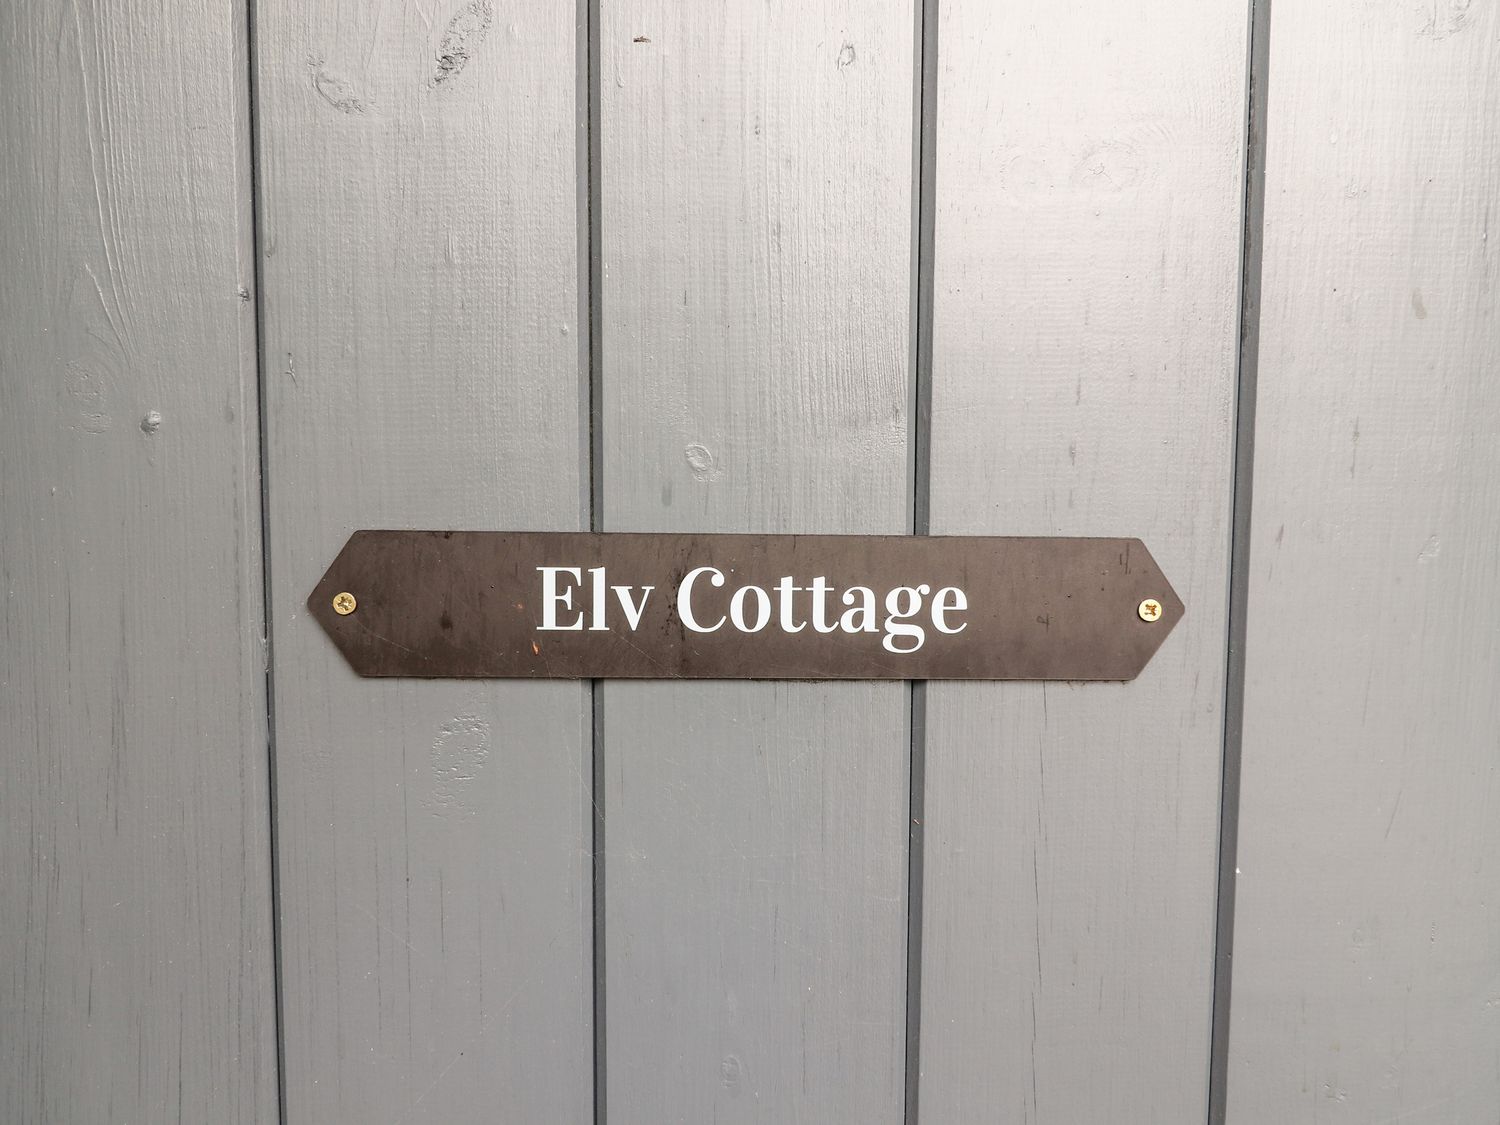 Elv Cottage, Cheshire